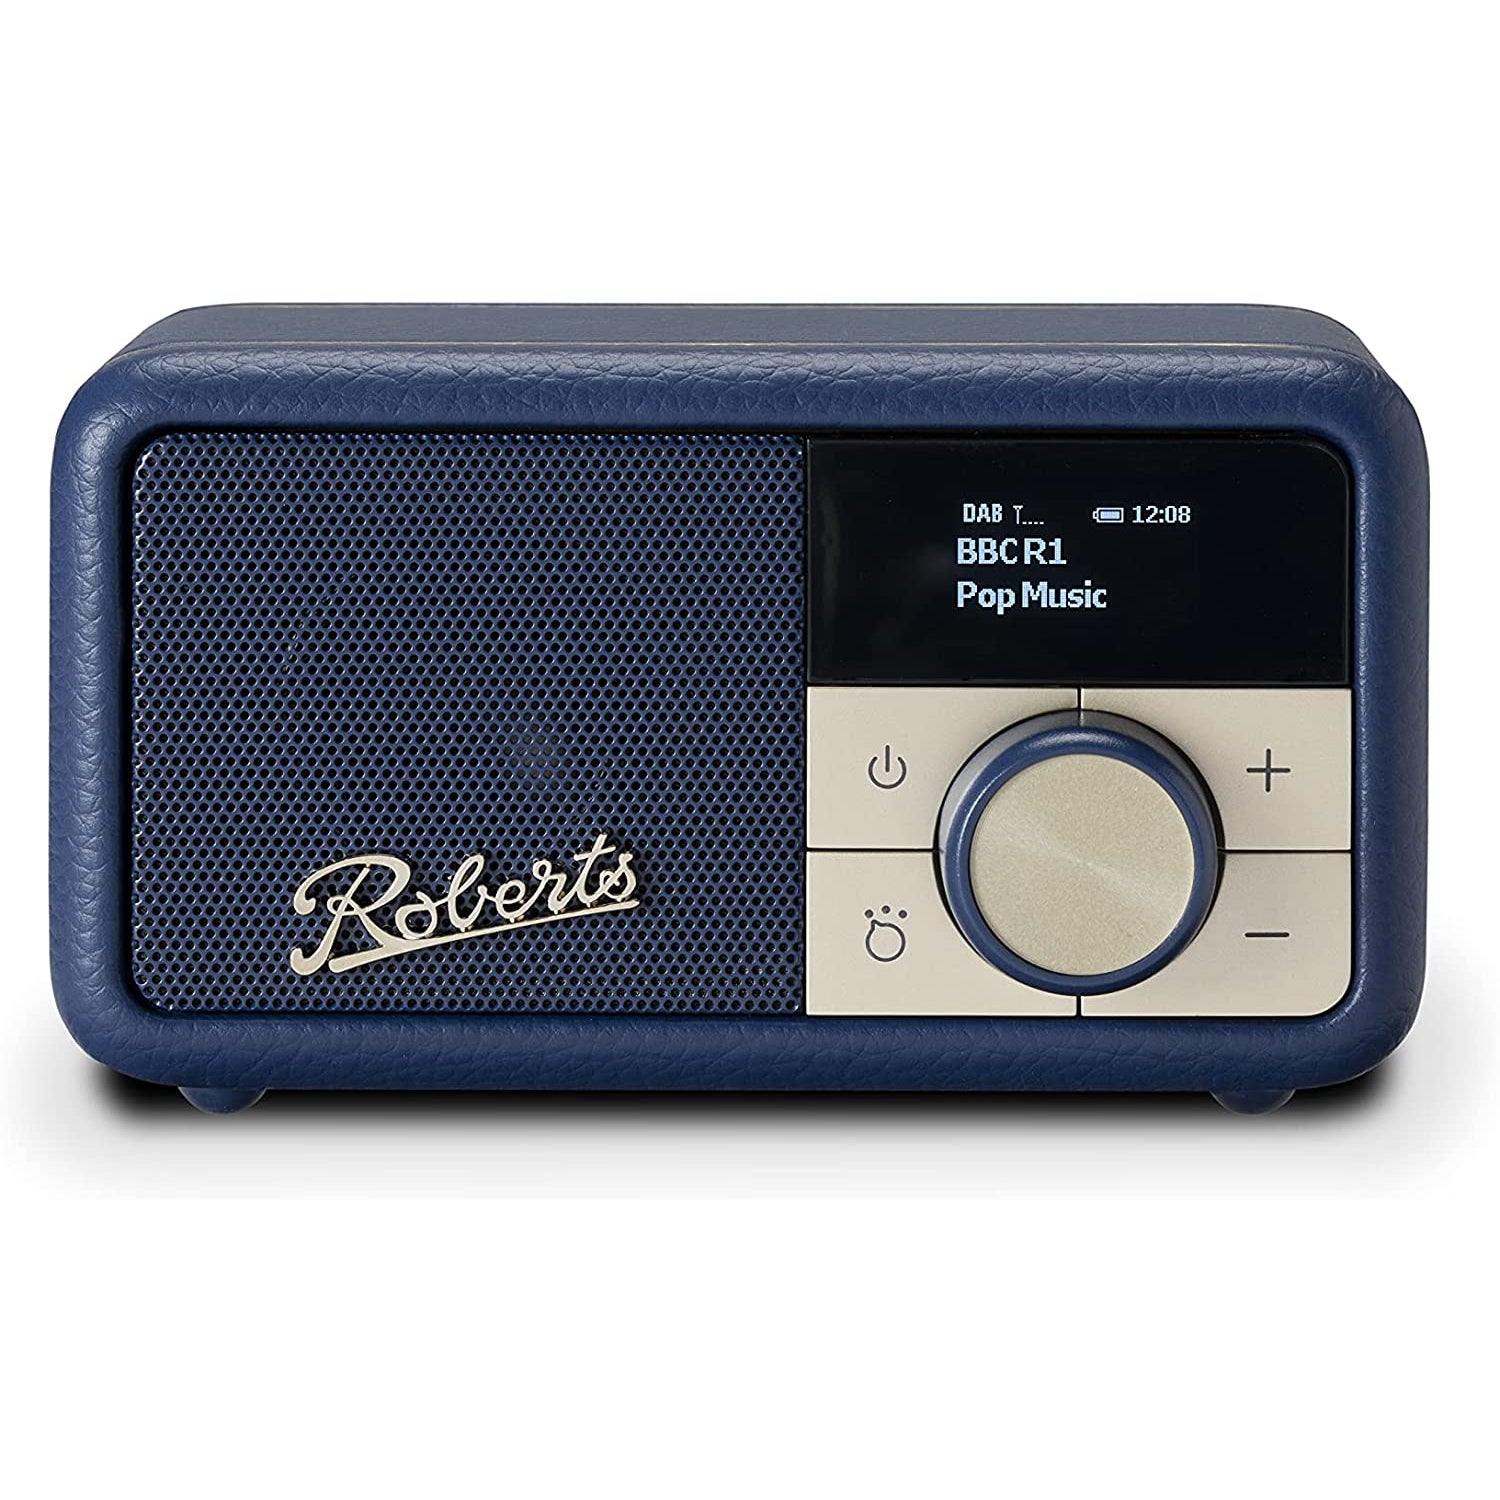 Roberts Revival Petite Mini DAB/FM Radio - Midnight Blue